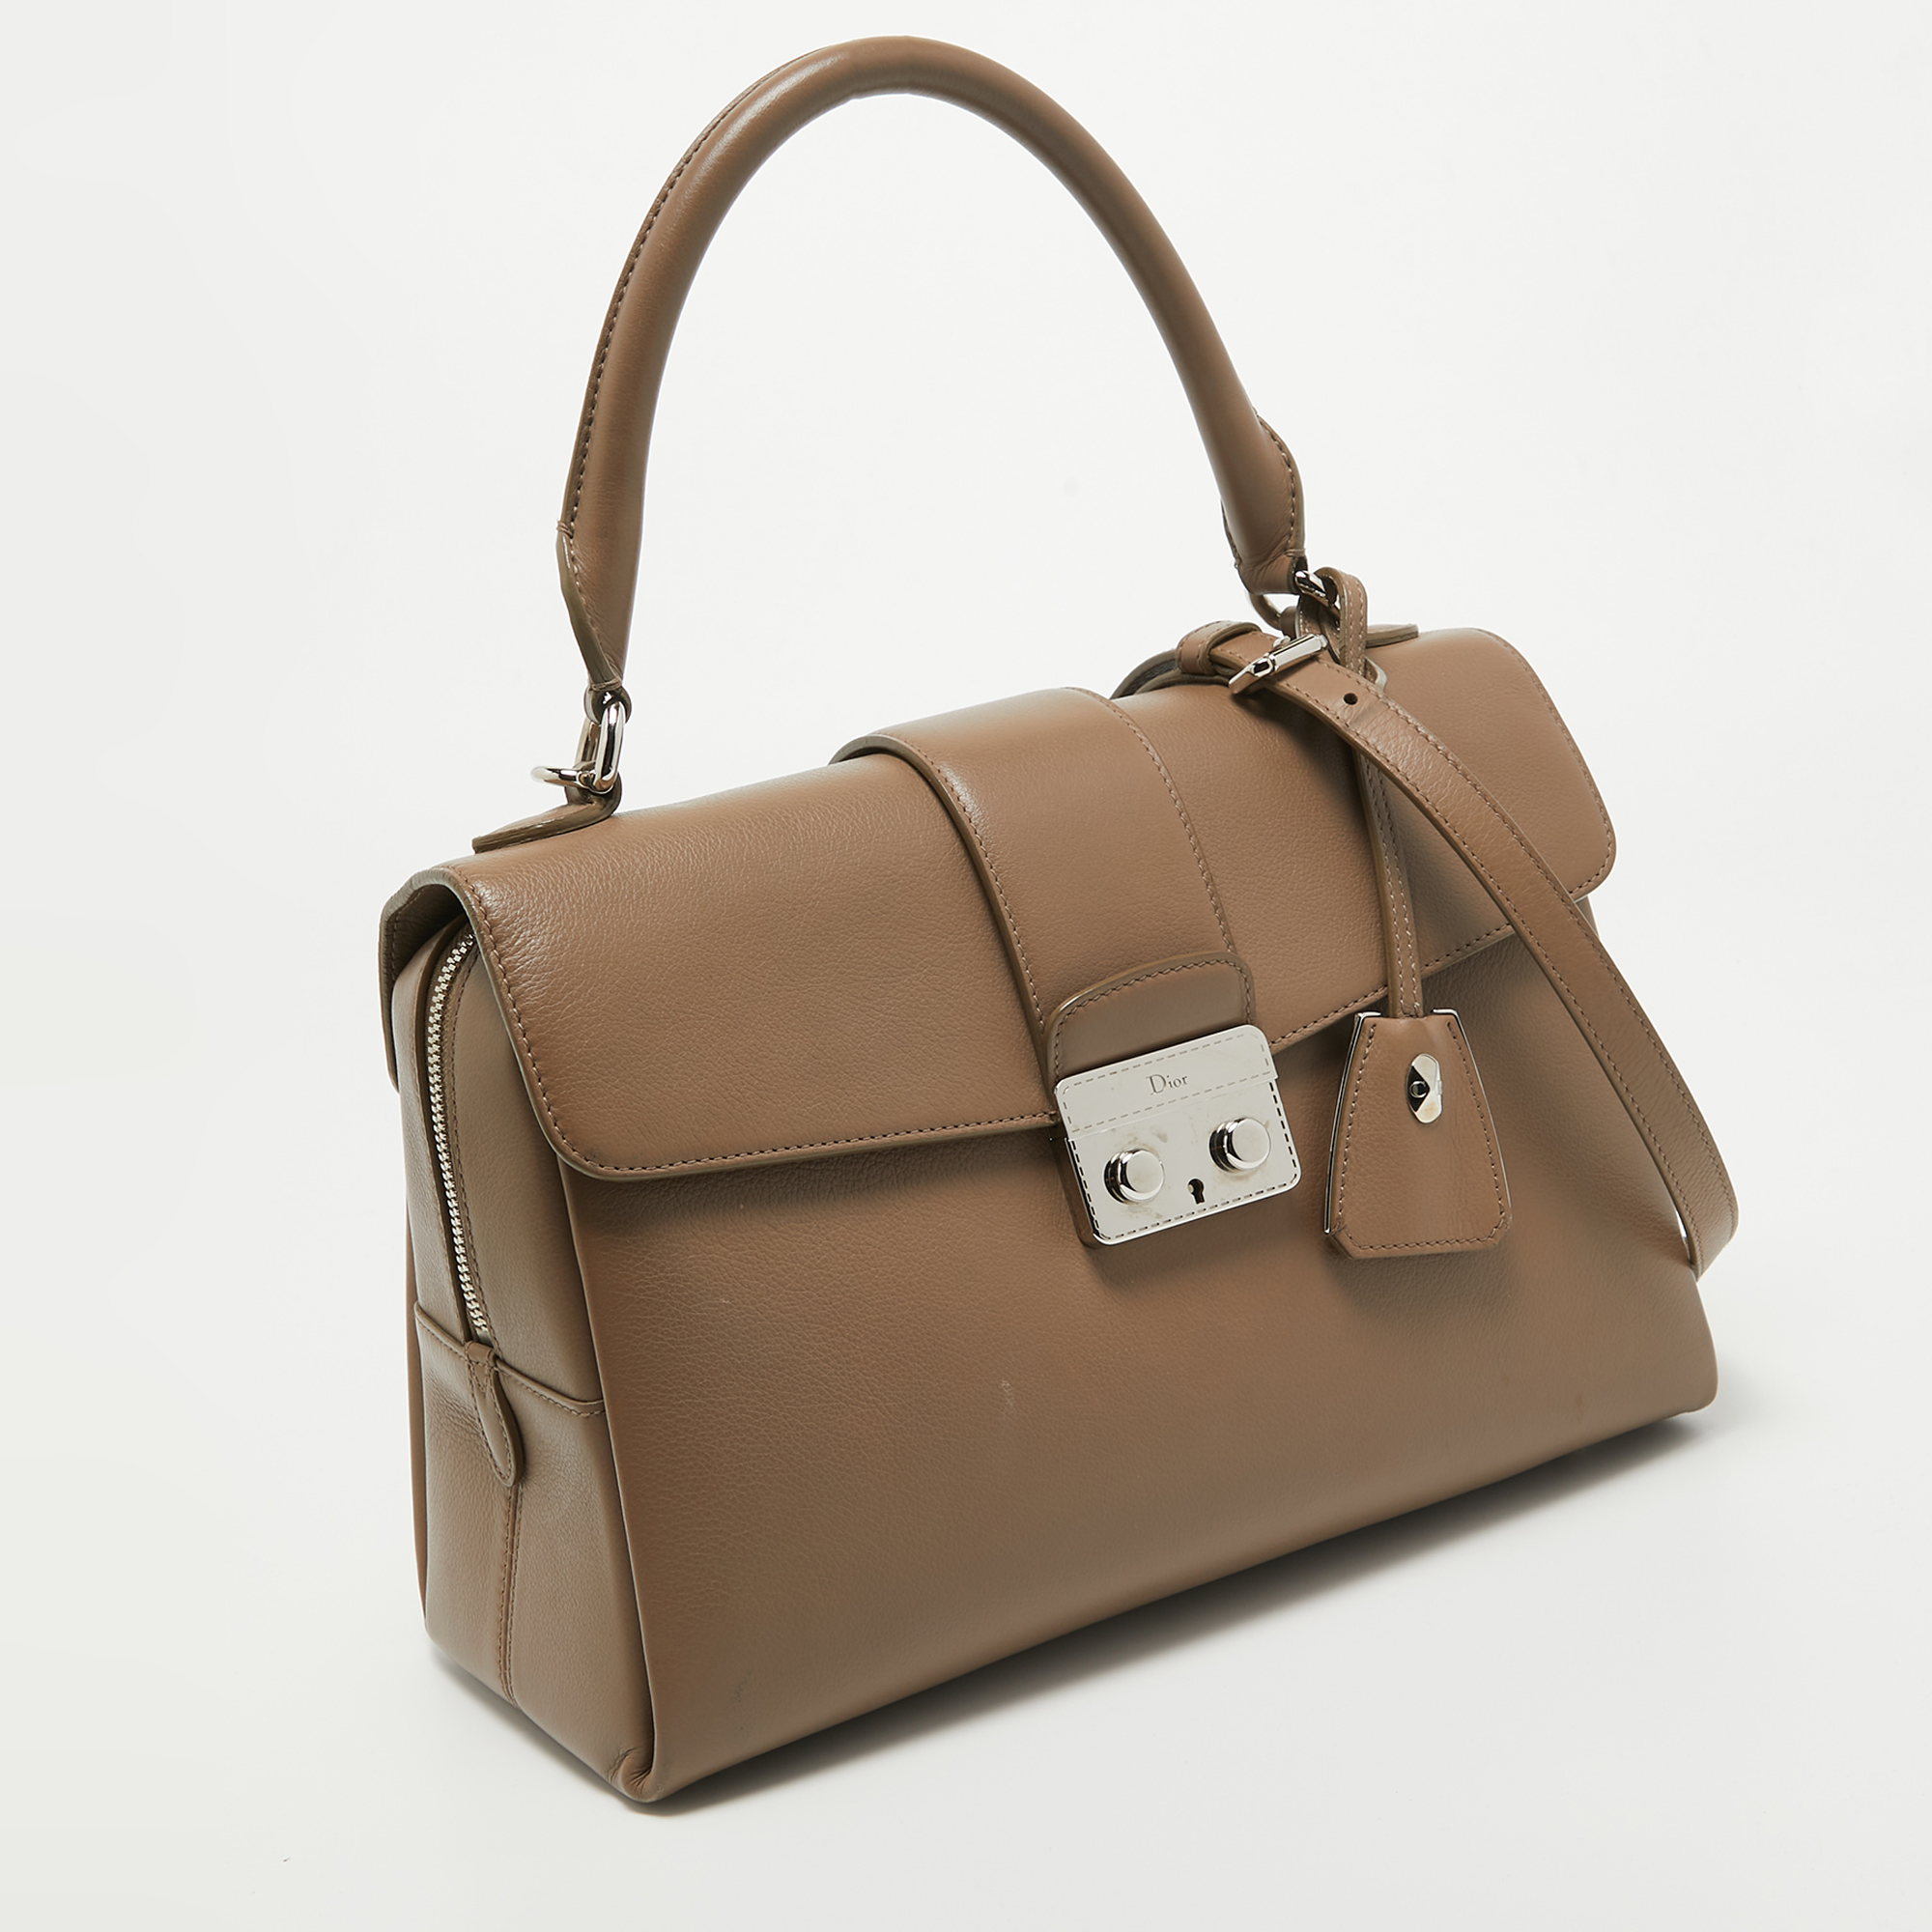 Dior Beige Leather New Lock Top Handle Bag